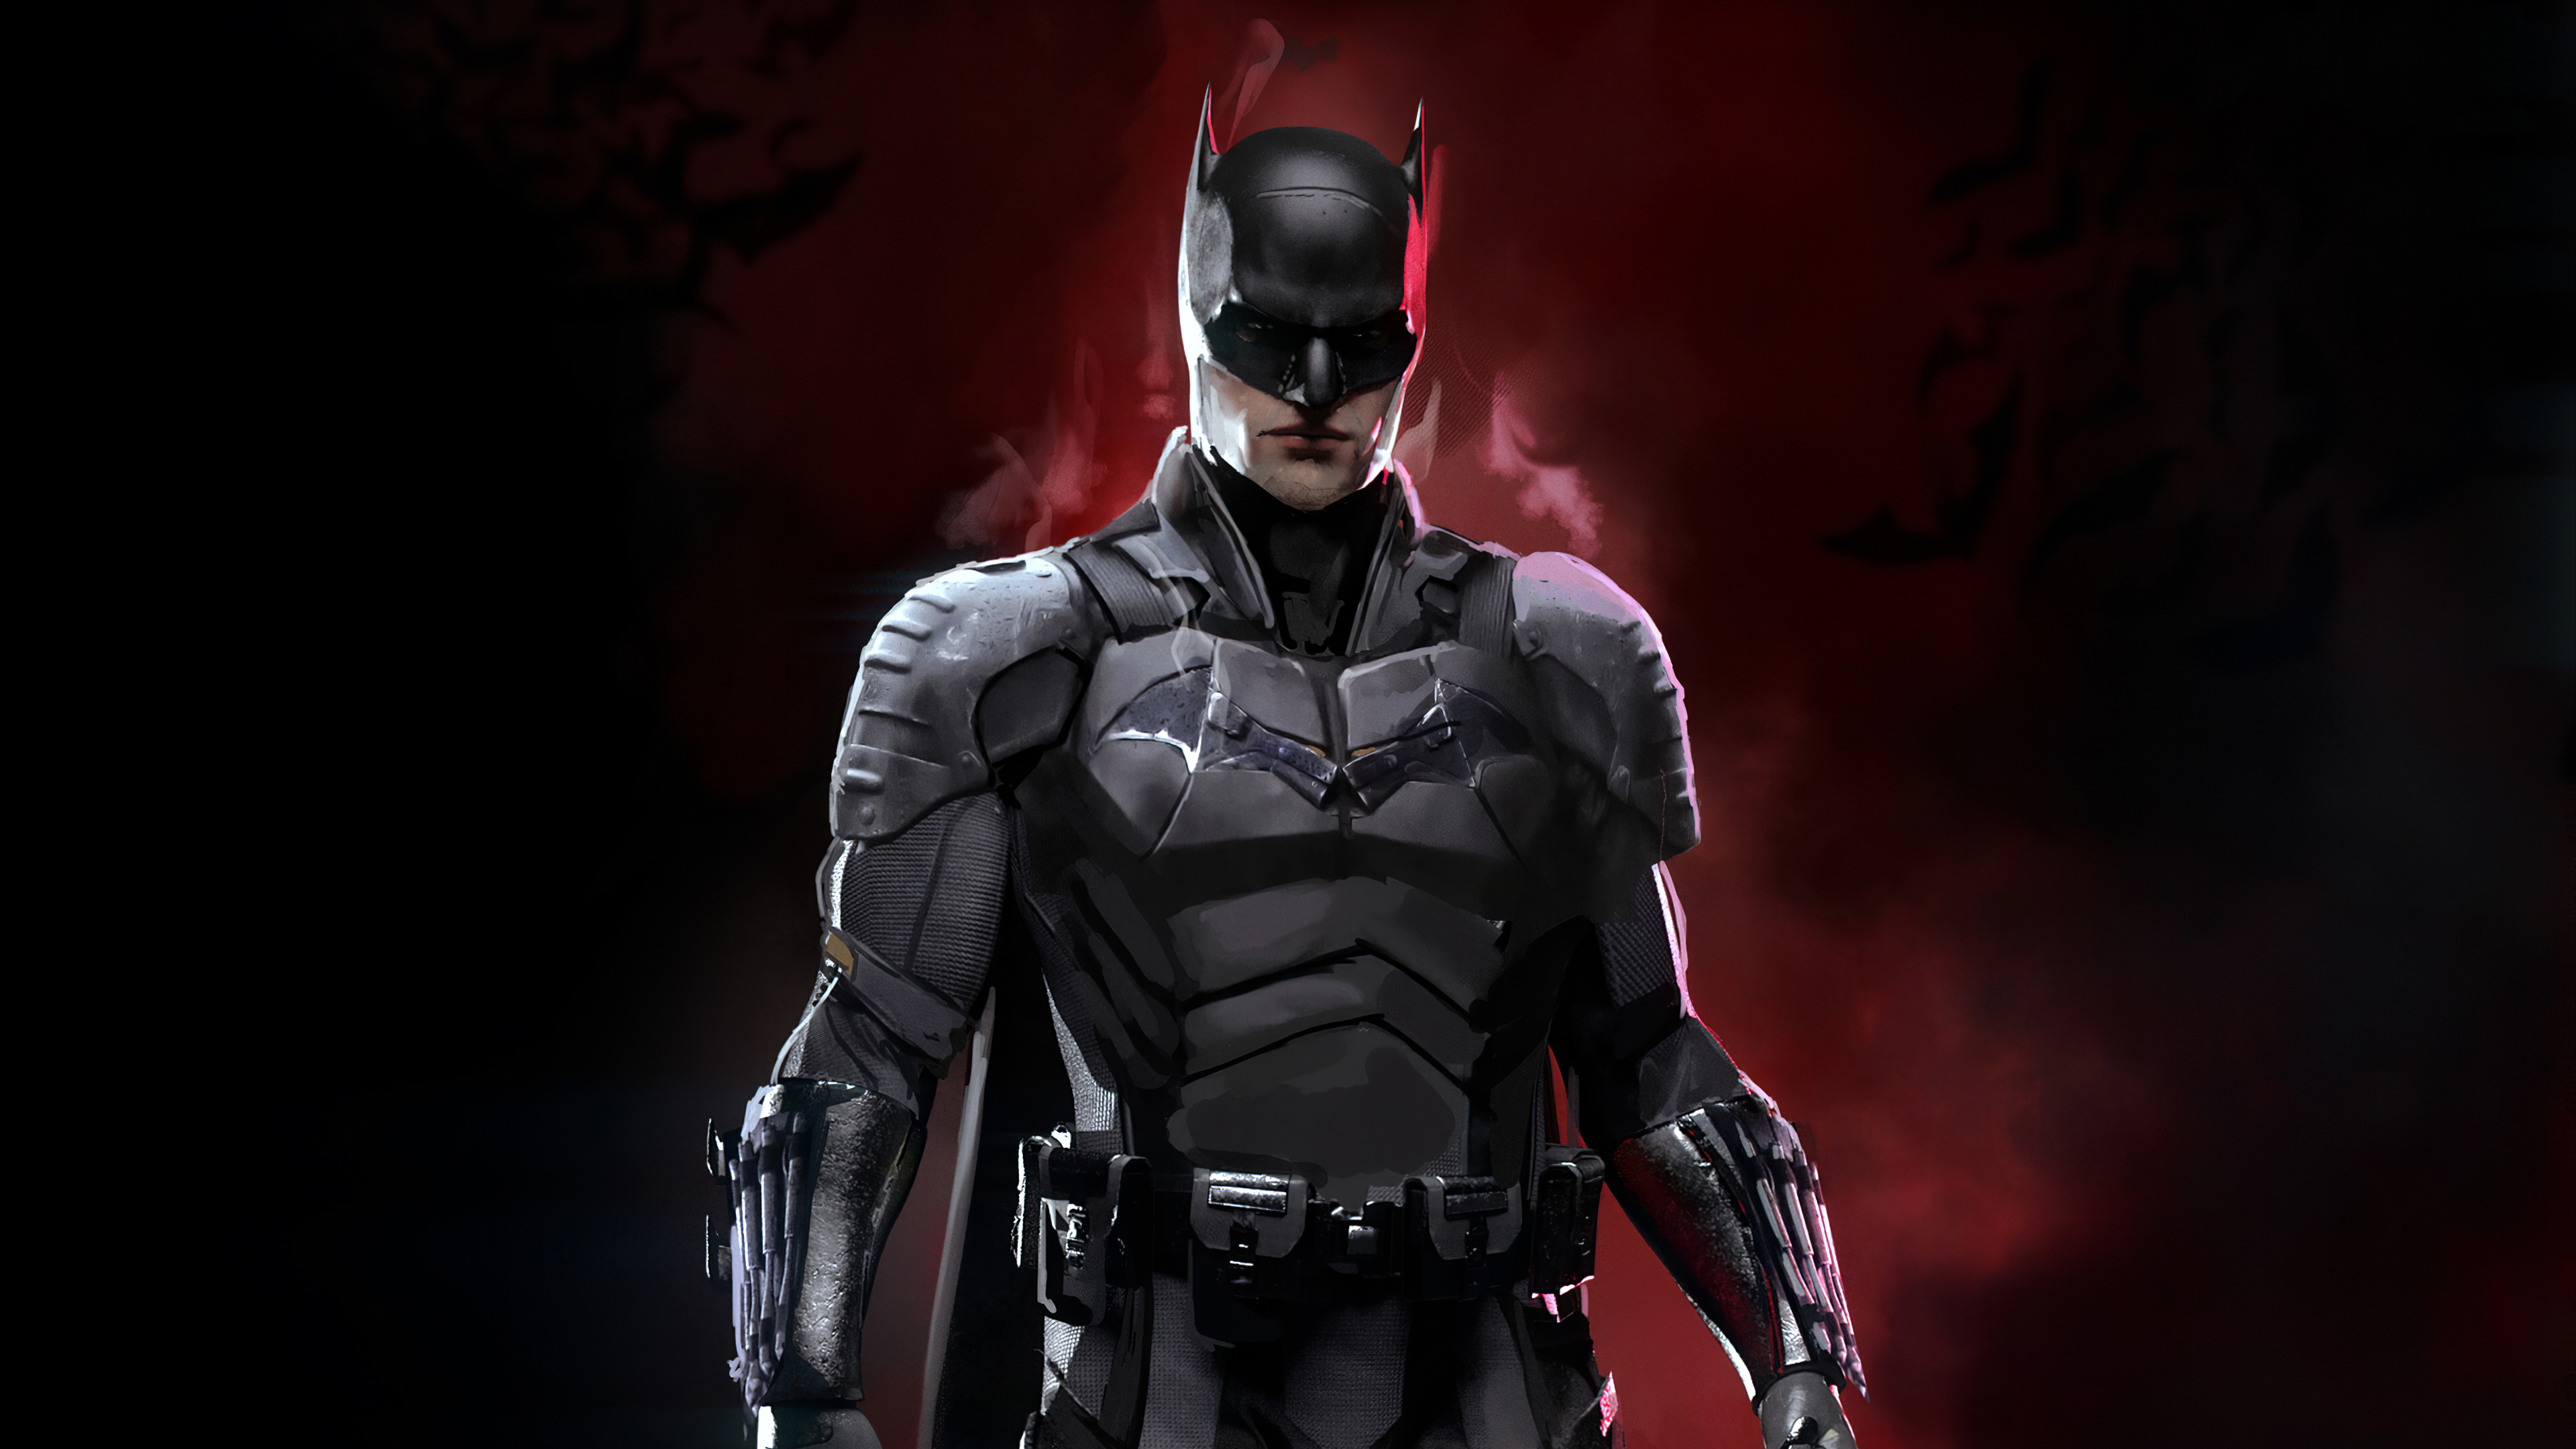 The Batman 4k Ultra HD Wallpaper | Background Image | 3840x2160 | ID